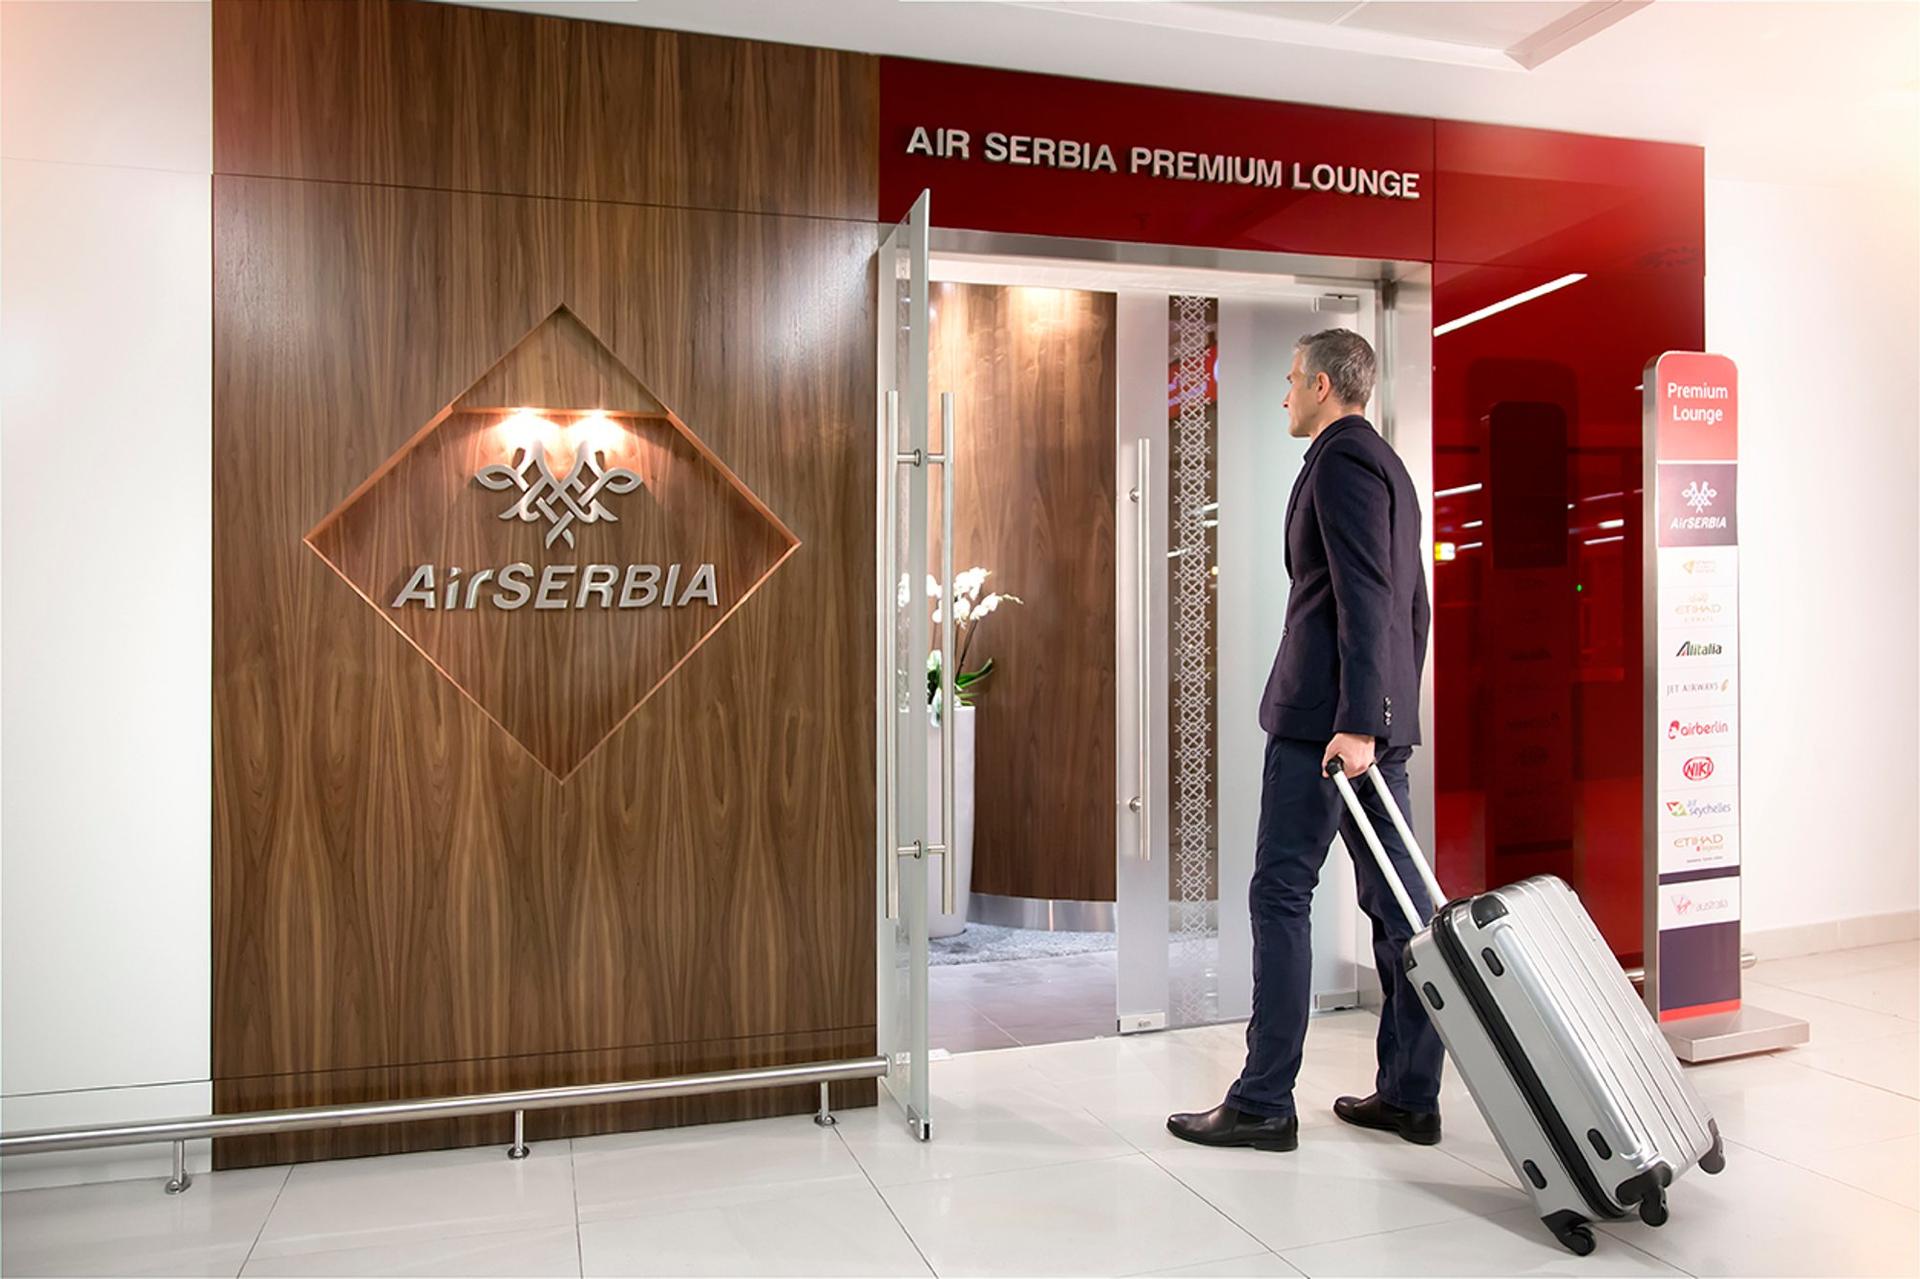 Air Serbia Premium Lounge image 5 of 25